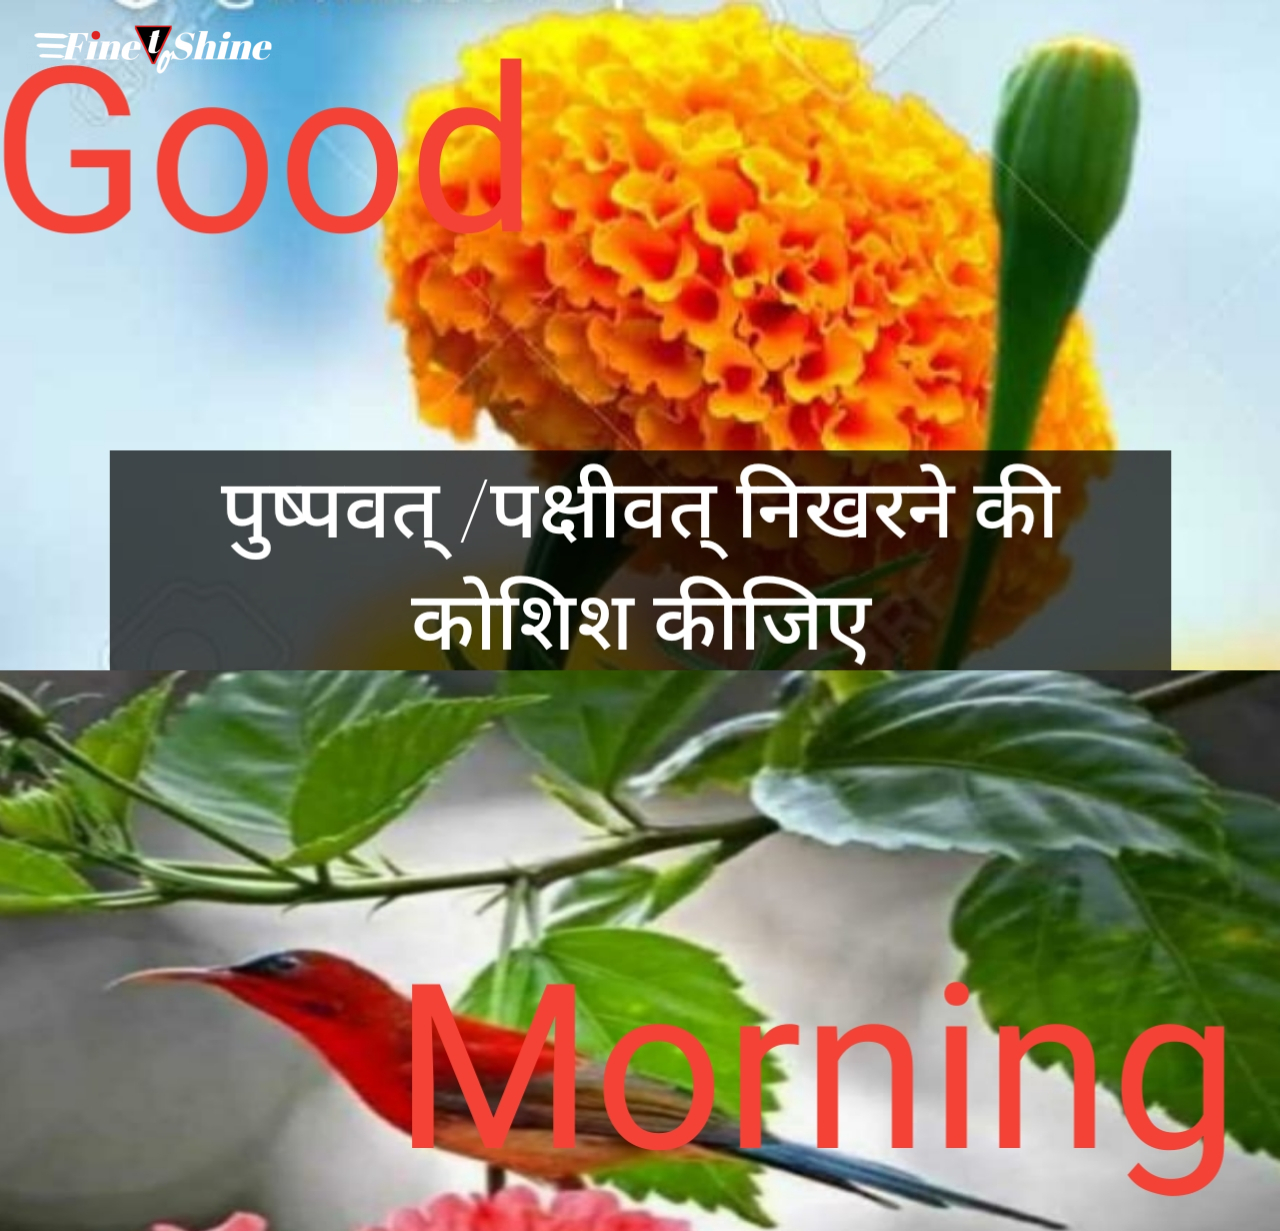 Good Morning Quotes In Hindi 19